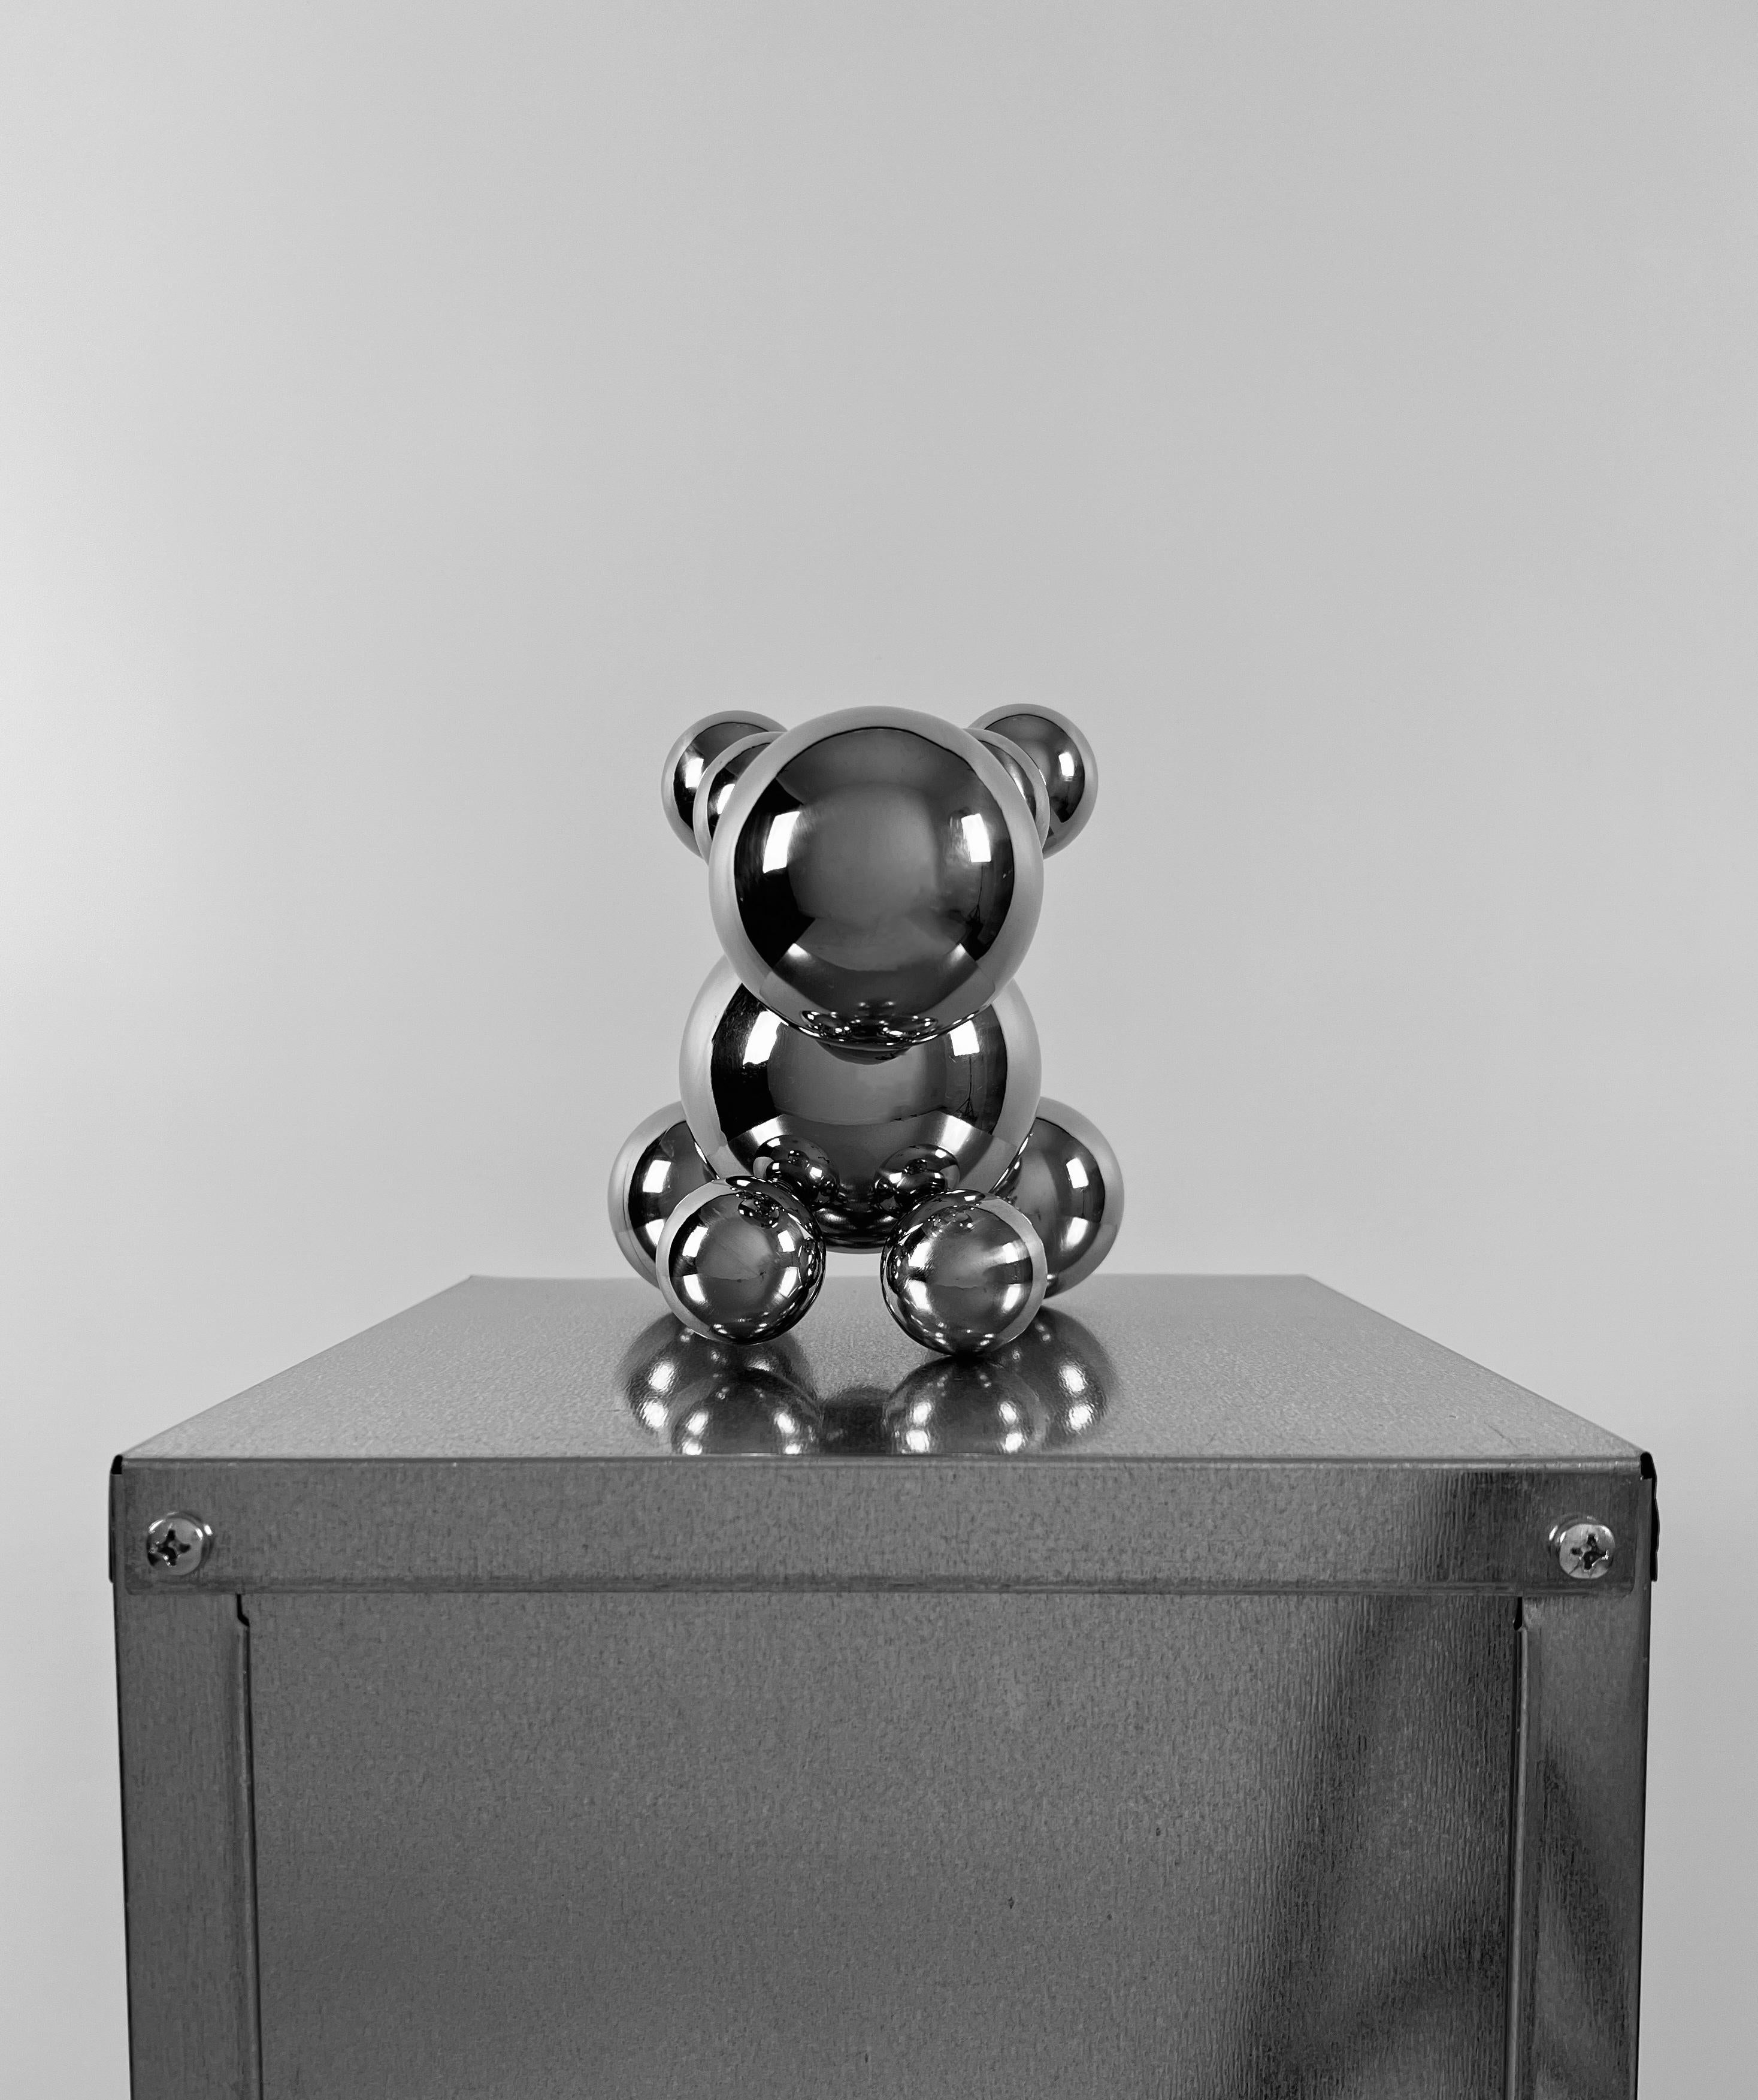 Stainless Steel Rabbit Robot Minimalistic Robot Sculpture 1